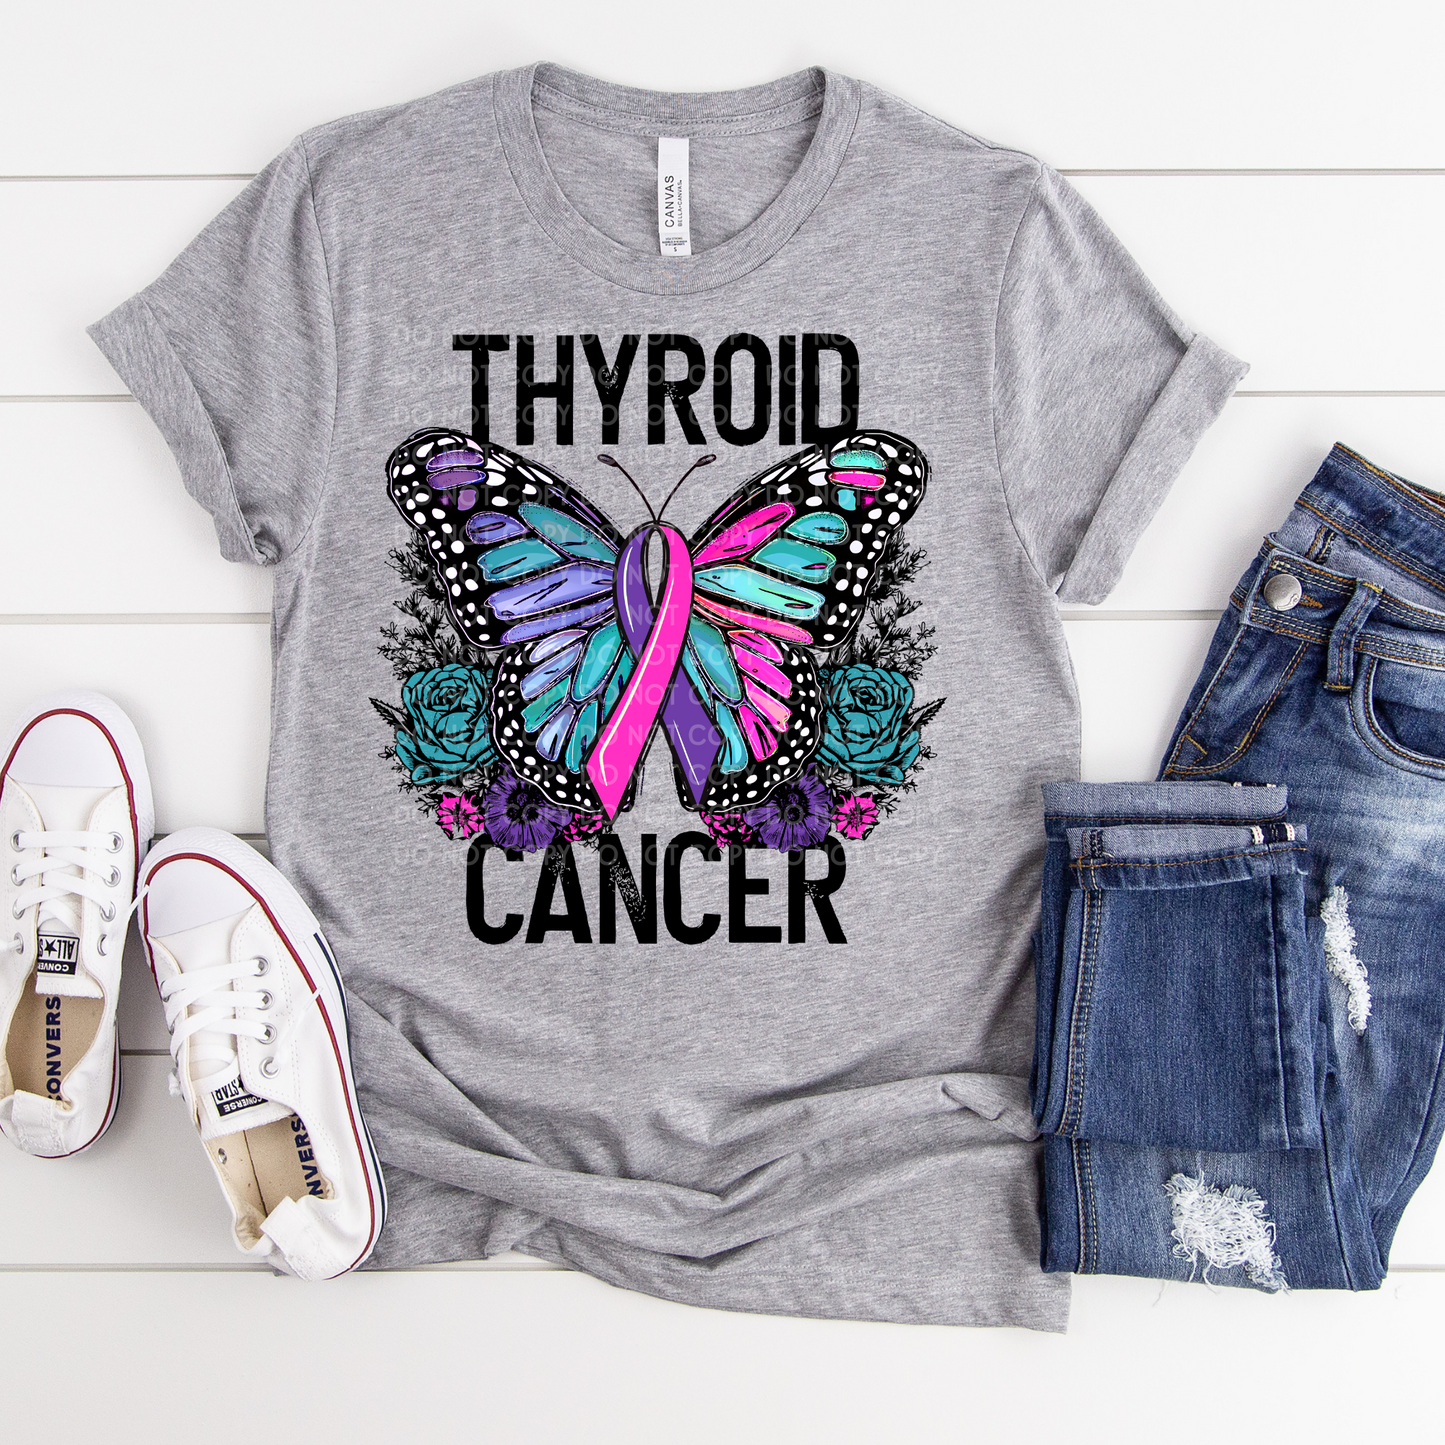 Thyroid Cancer - DTF TRANSFER